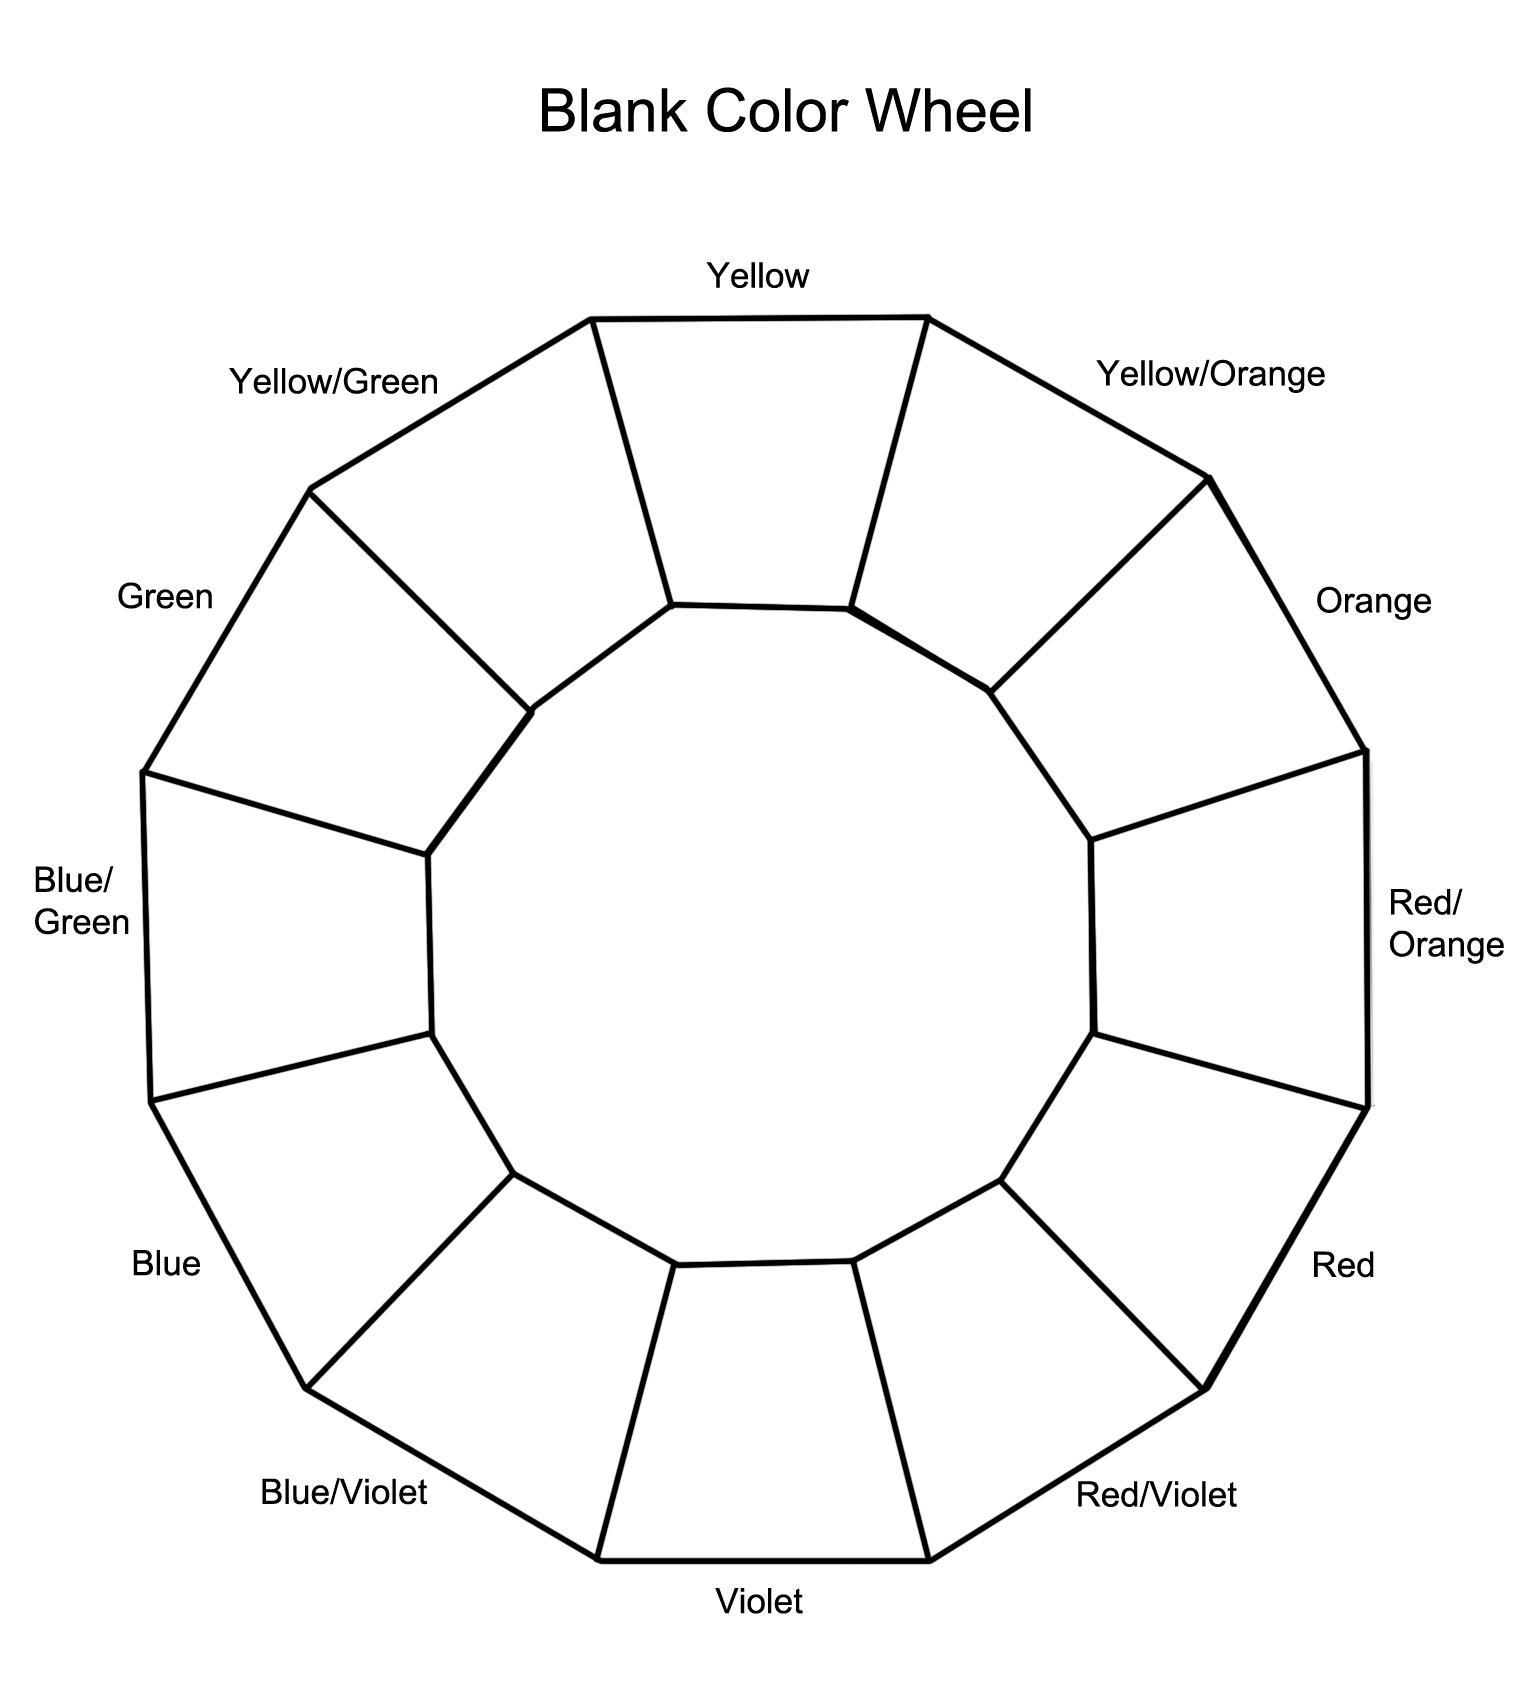 Blank Color Wheel Color wheel worksheet, Color wheel, Color wheel art